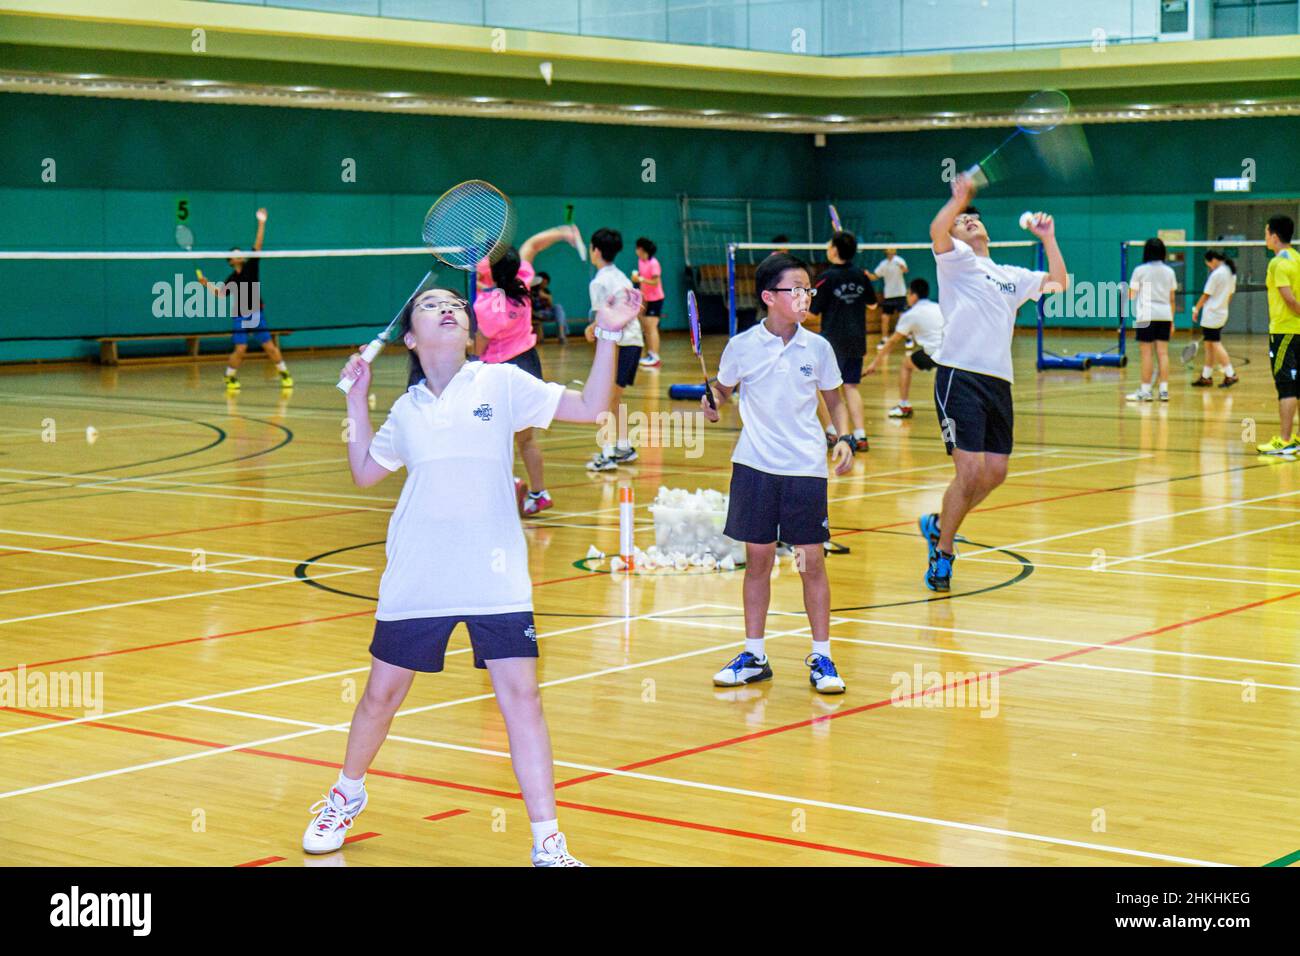 Hong Kong Chinese Island,Hong Kong Park Sports Centre,center,badminton courts indoor gymnasium,Asian boys girl female students practicing serving Stock Photo